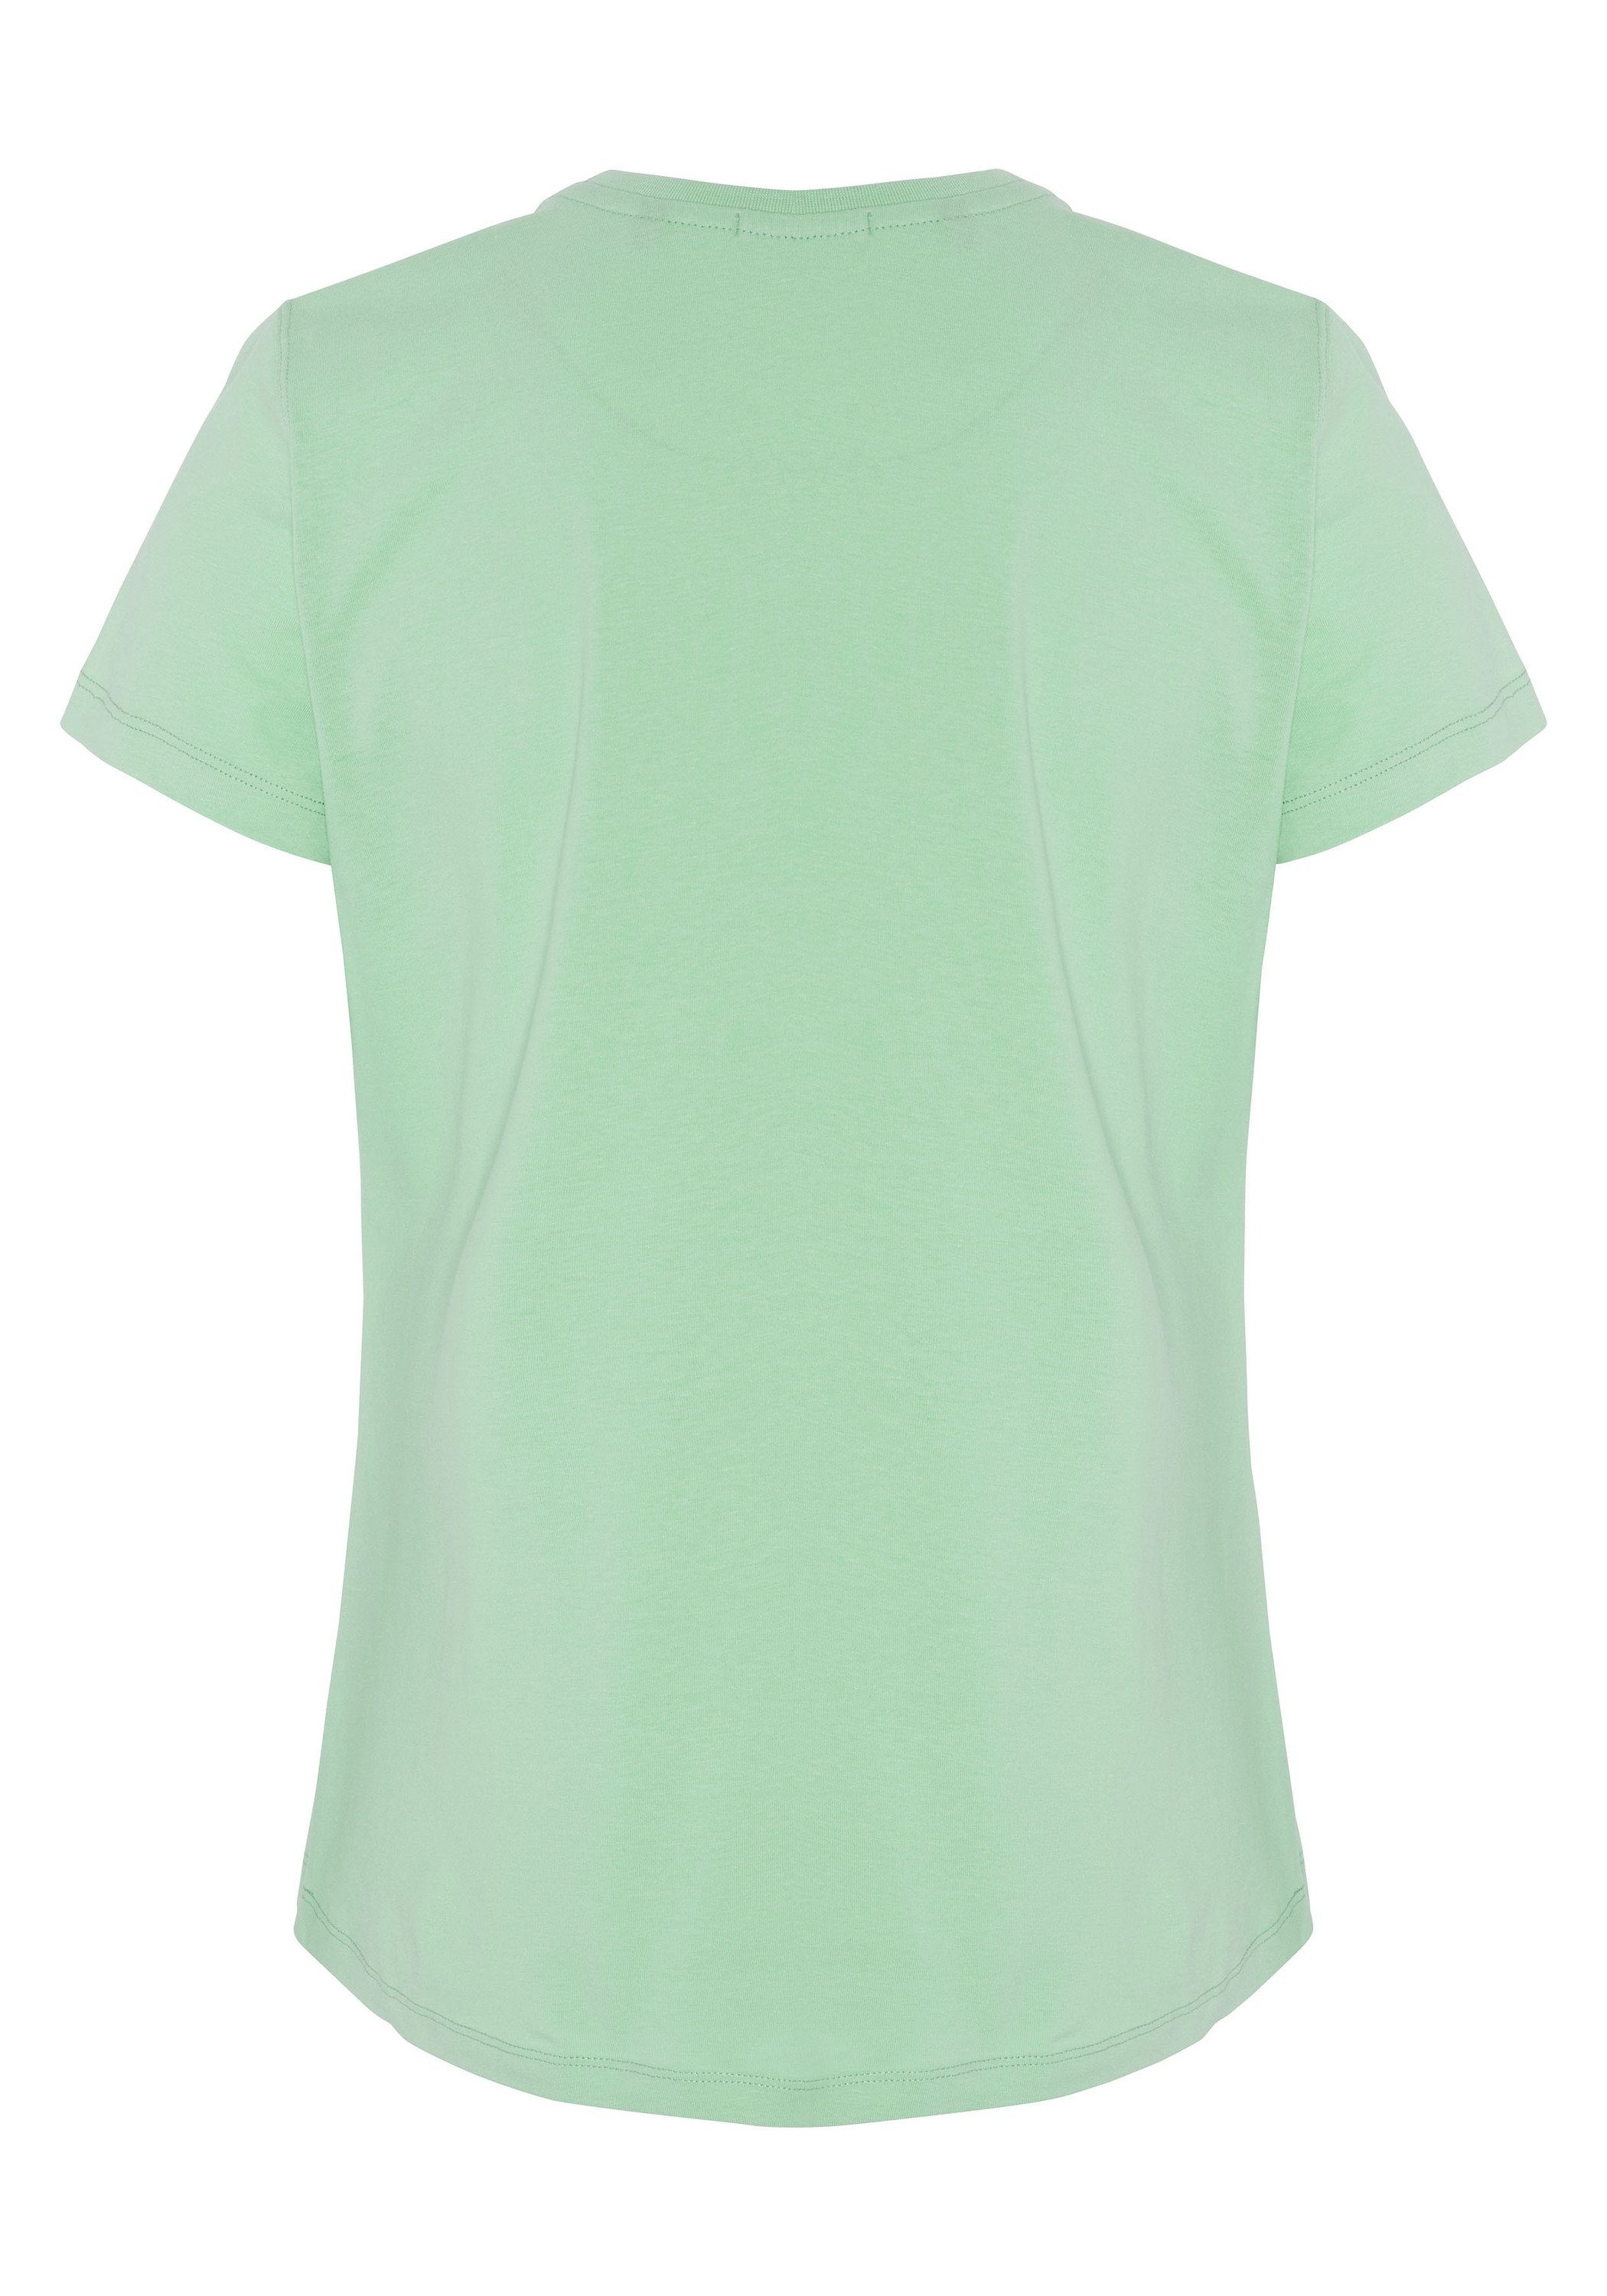 mit Green Print-Shirt farbenfrohem 1 Frontprint Neptune Chiemsee T-Shirt